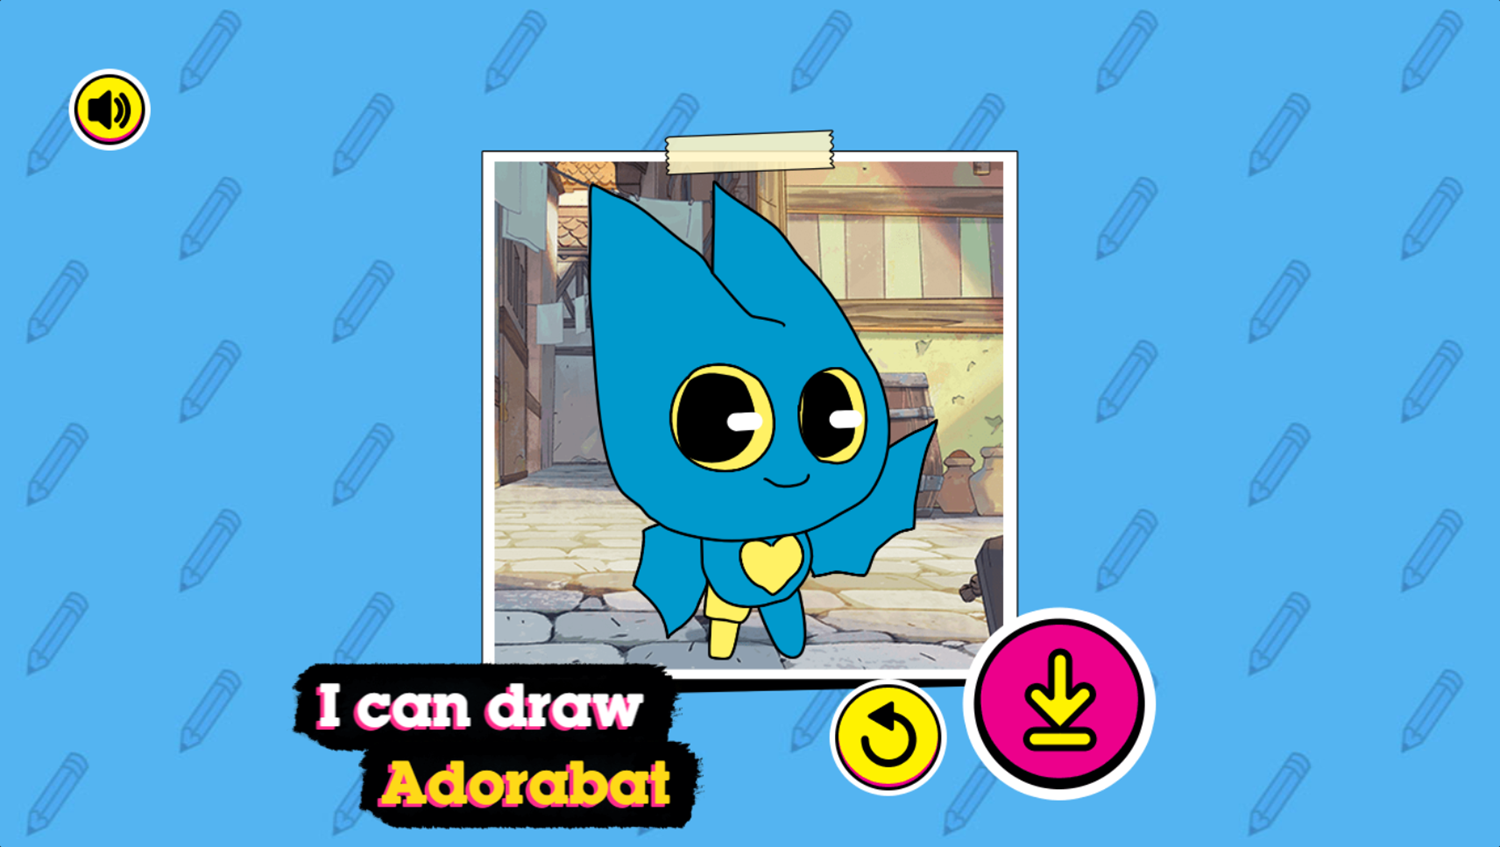 Mao Mao How to Draw Adorabat Game Sketch Complete Screenshot.